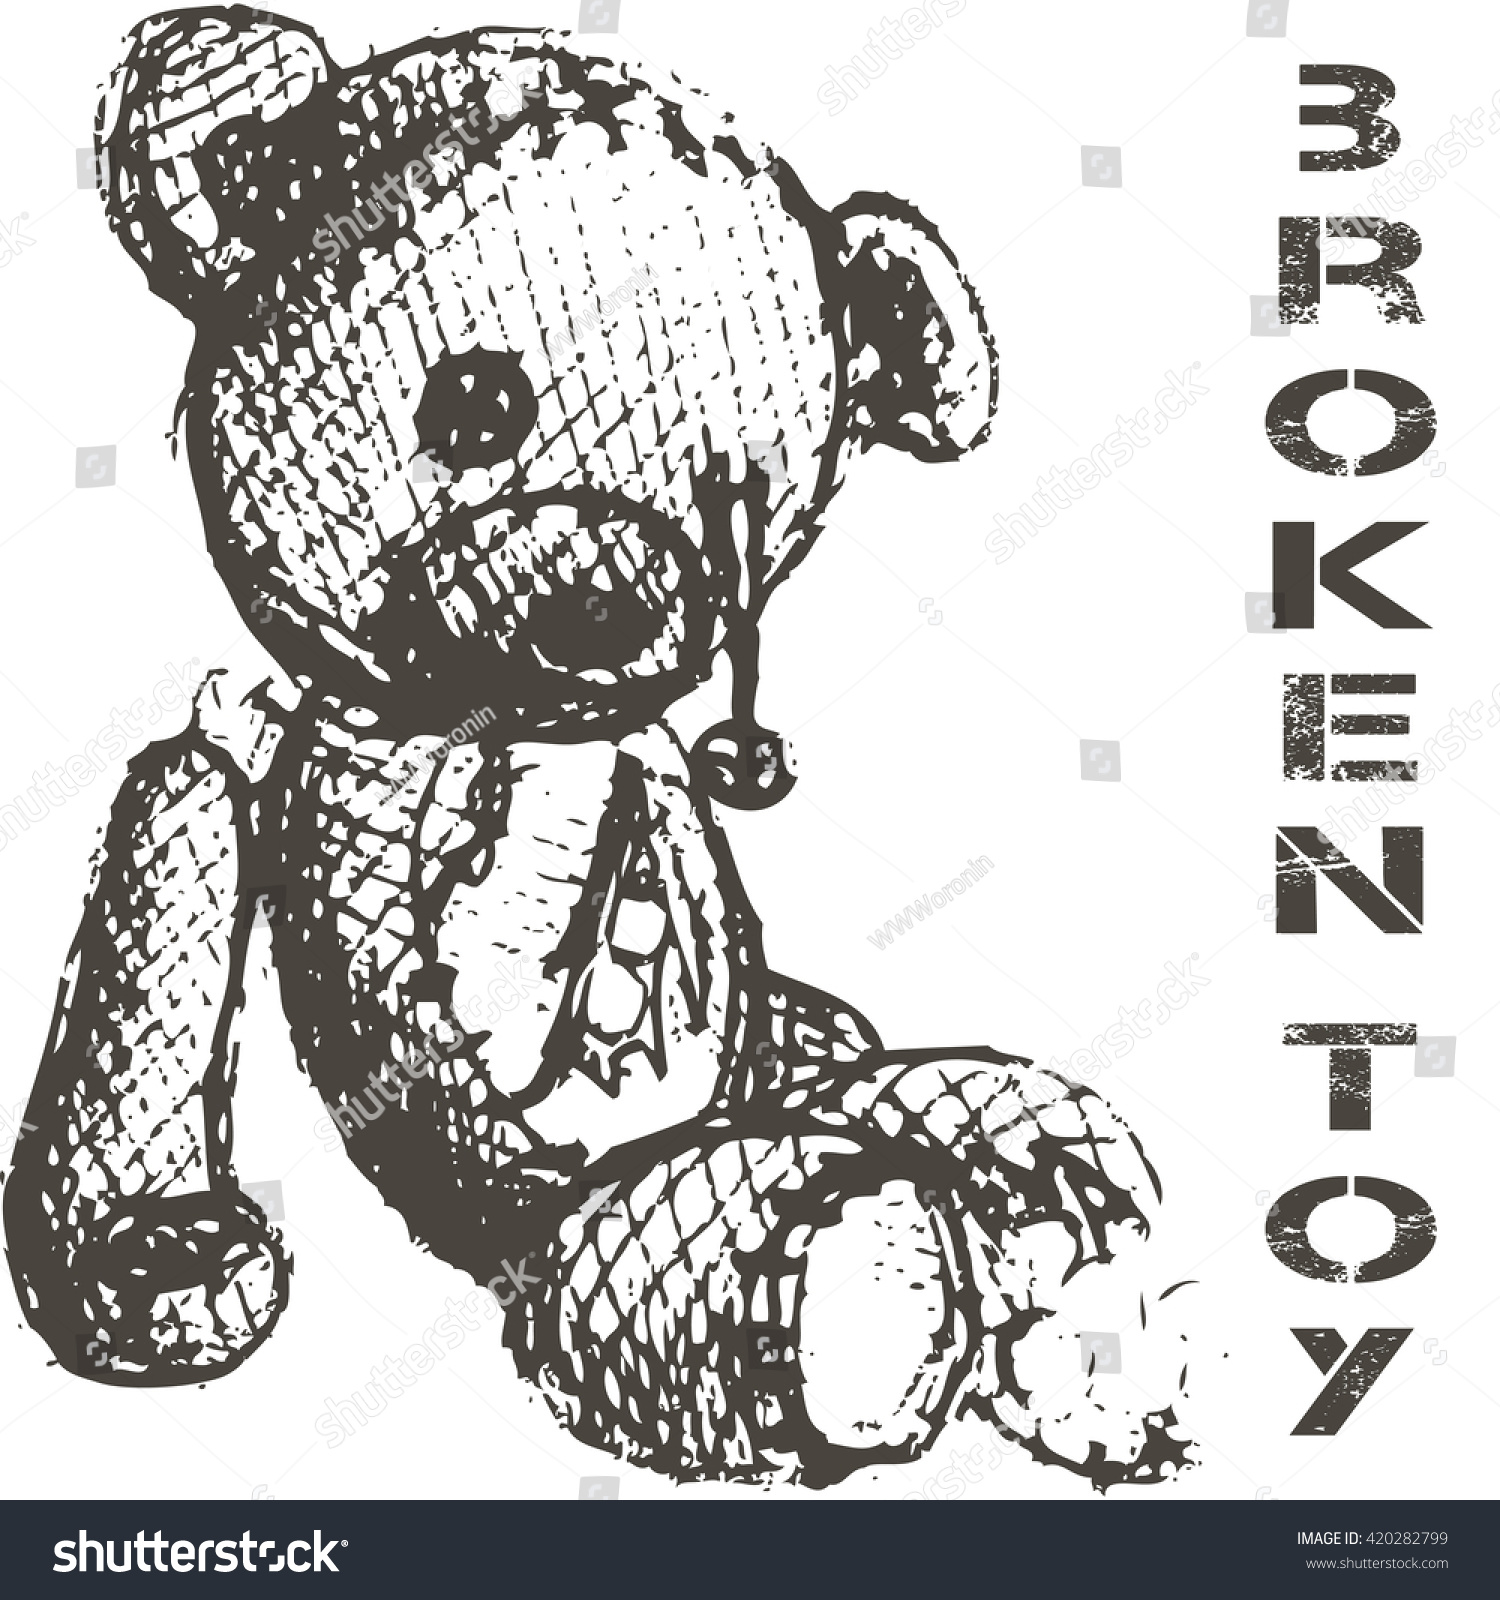 SVG of Conceptual hand drawn sketch depicting a broken toy bear svg